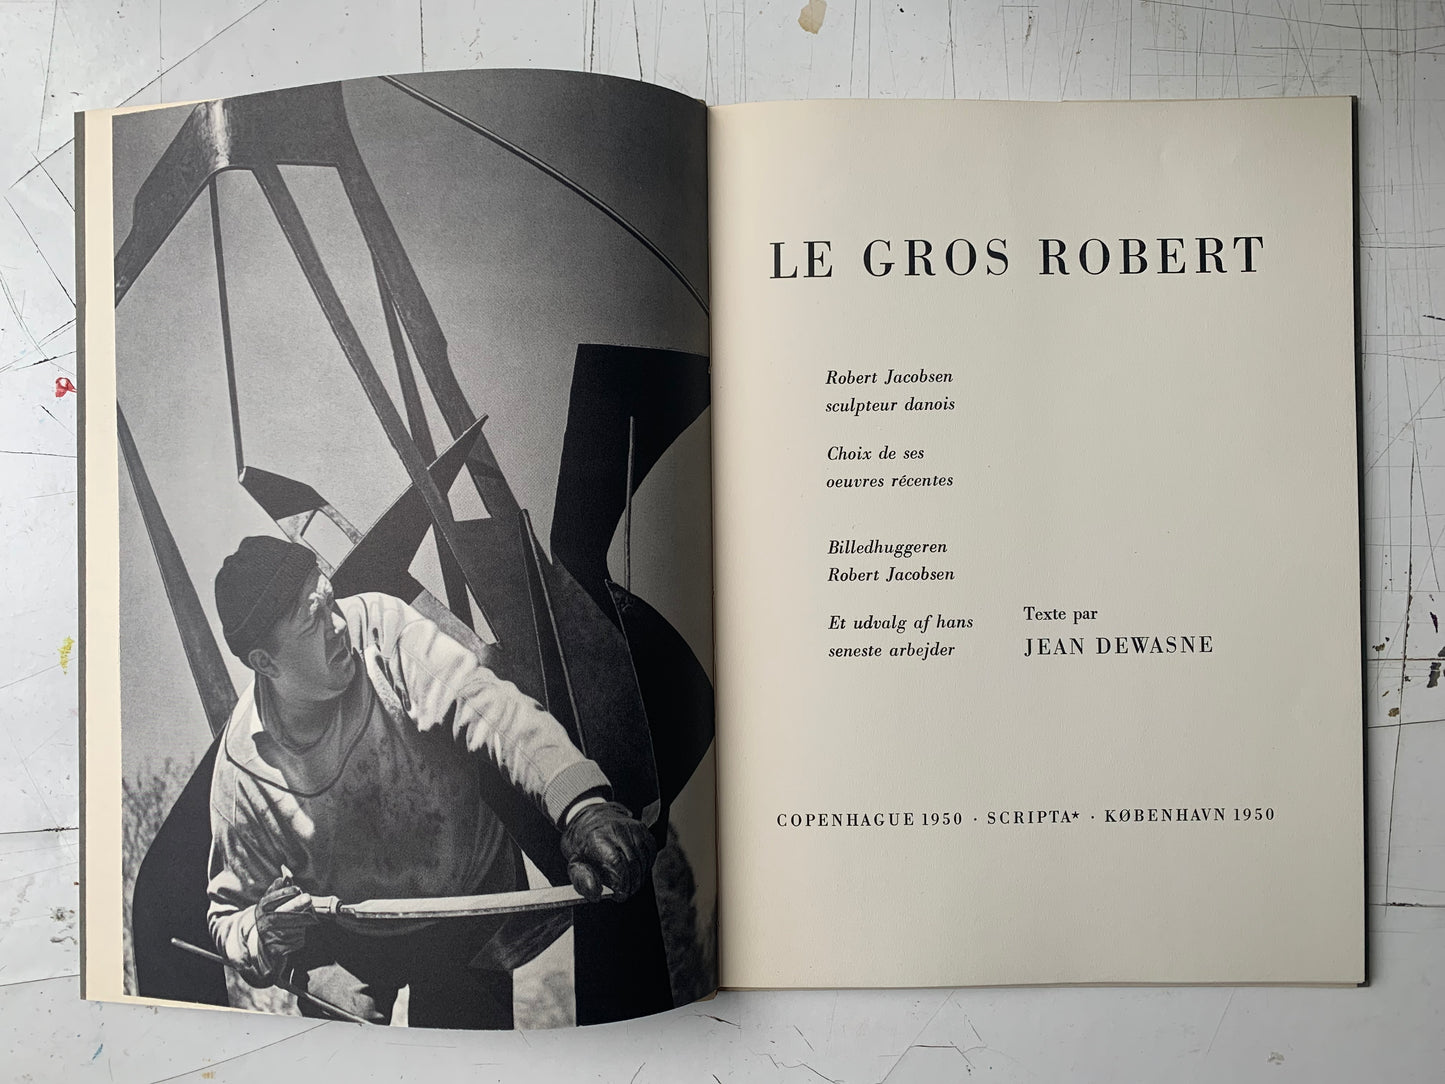 Jean Dewasne. “Le Gros Robert”, 1950